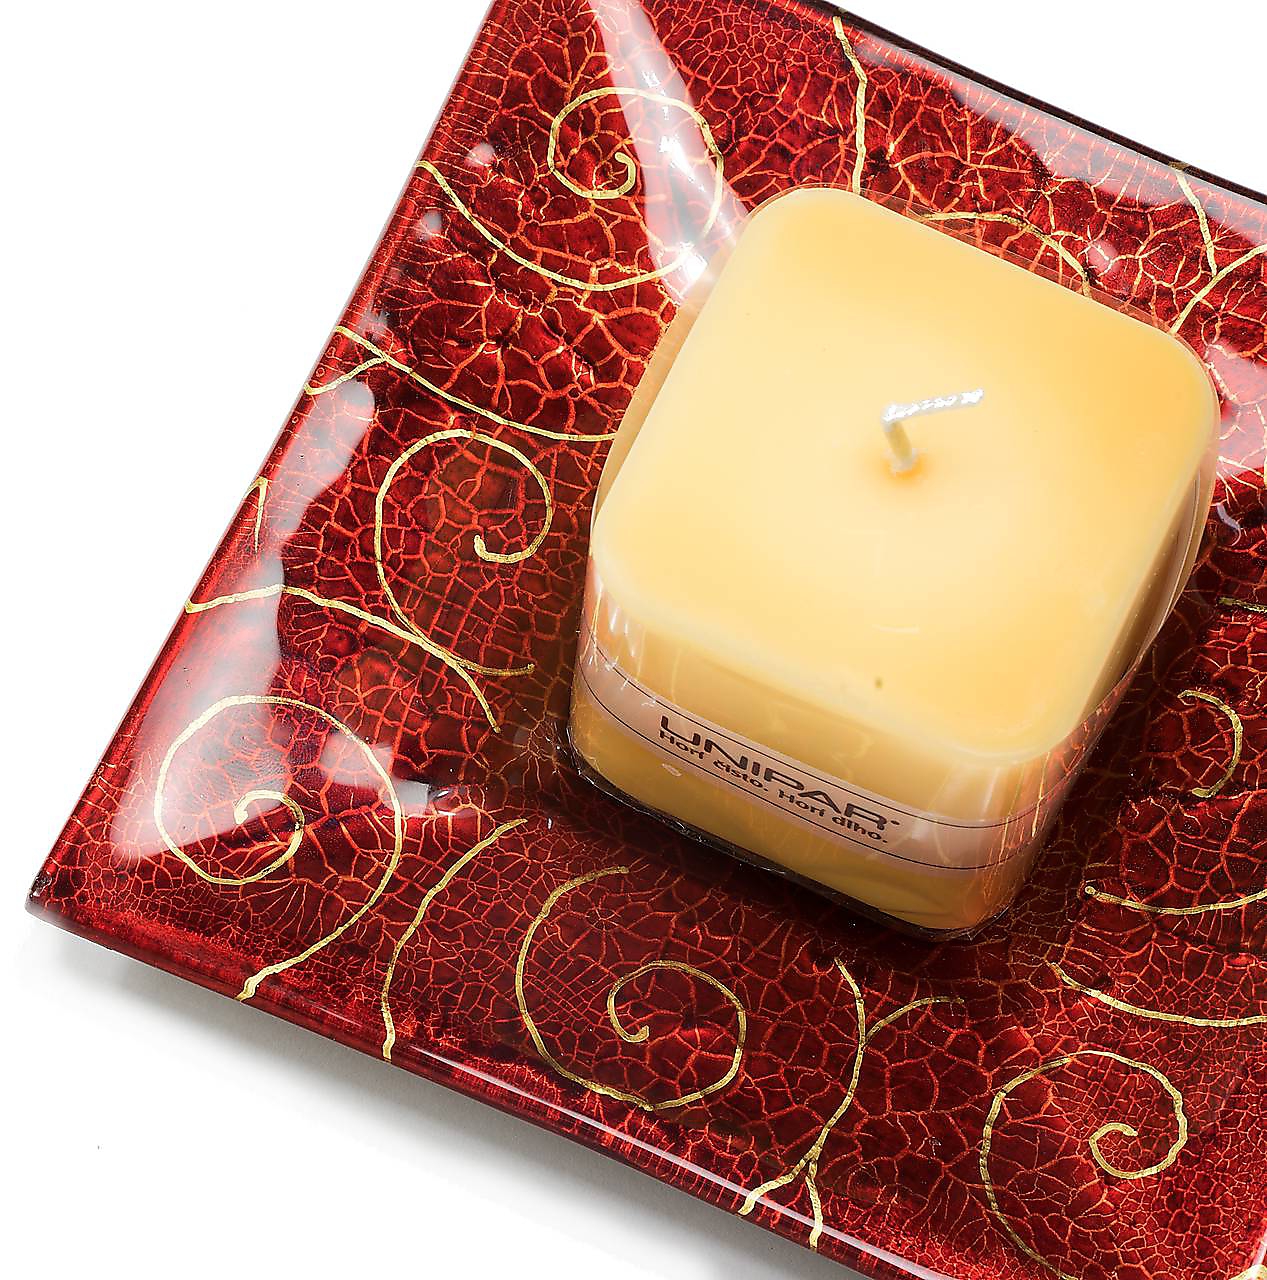 Sklenený svietnik so sviečkou červený JUNE 03 - dekor zlaté špirály